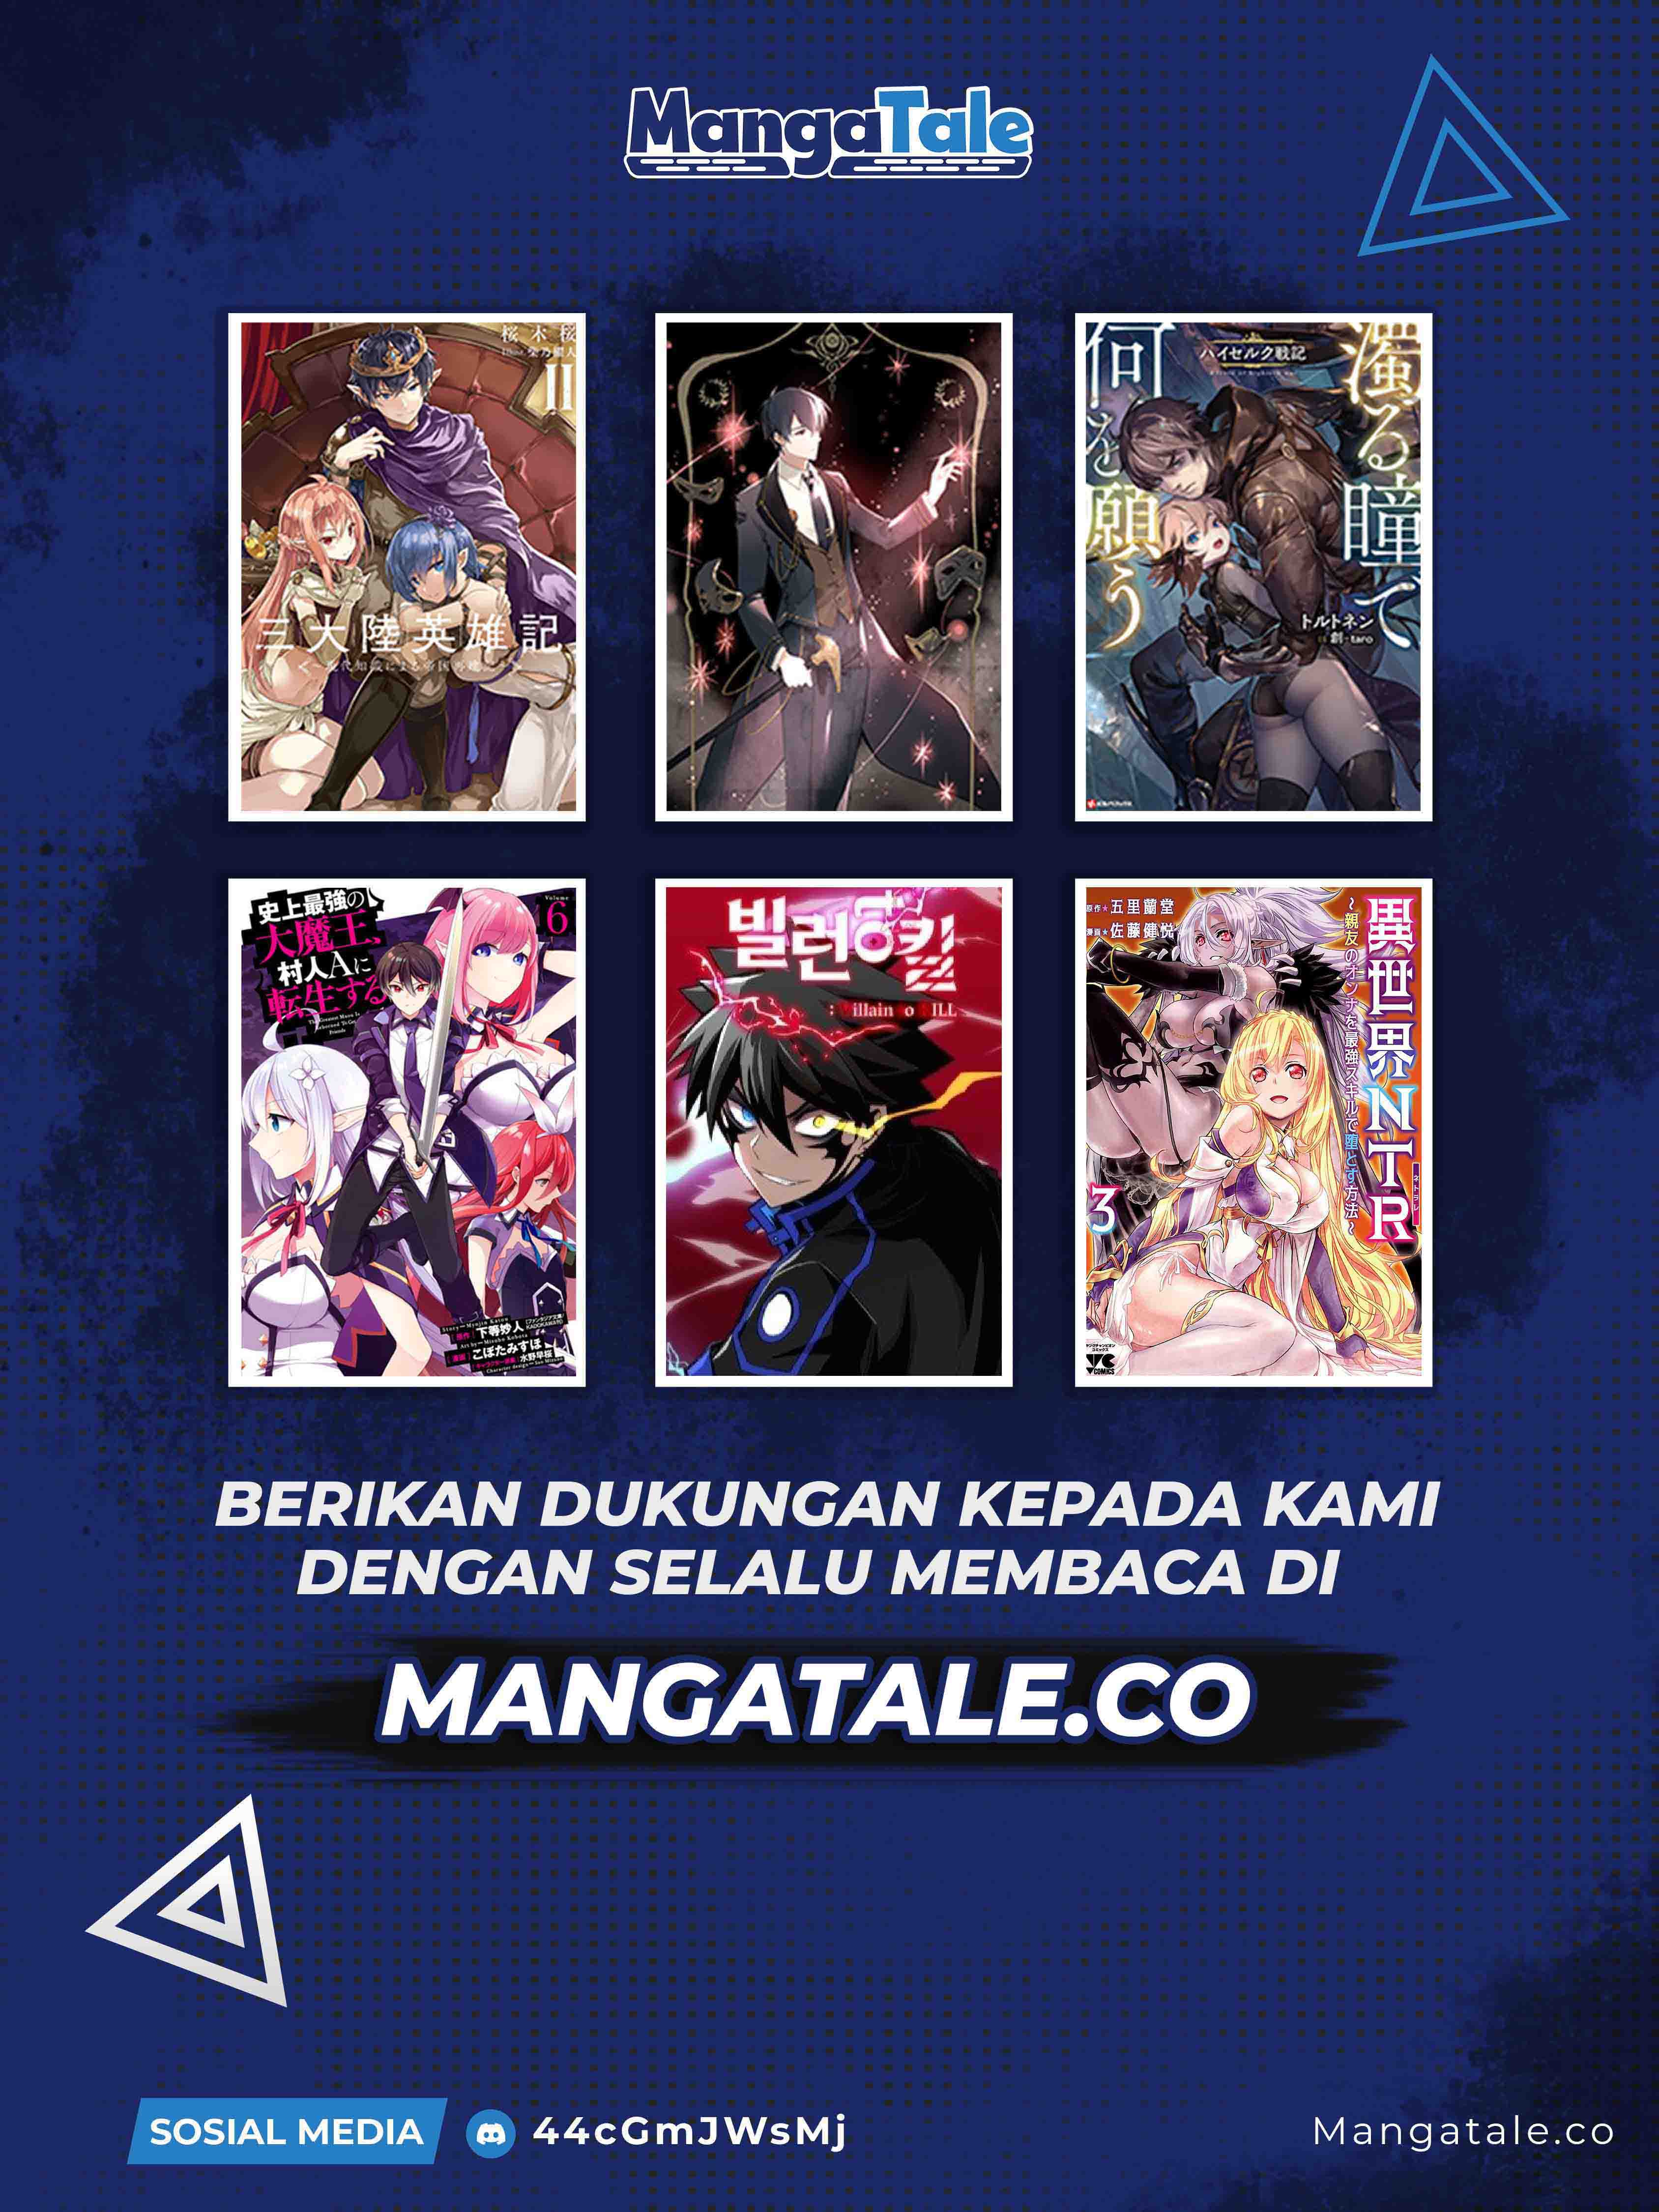 Knights & Magic Chapter 108 Bahasa Indonesia